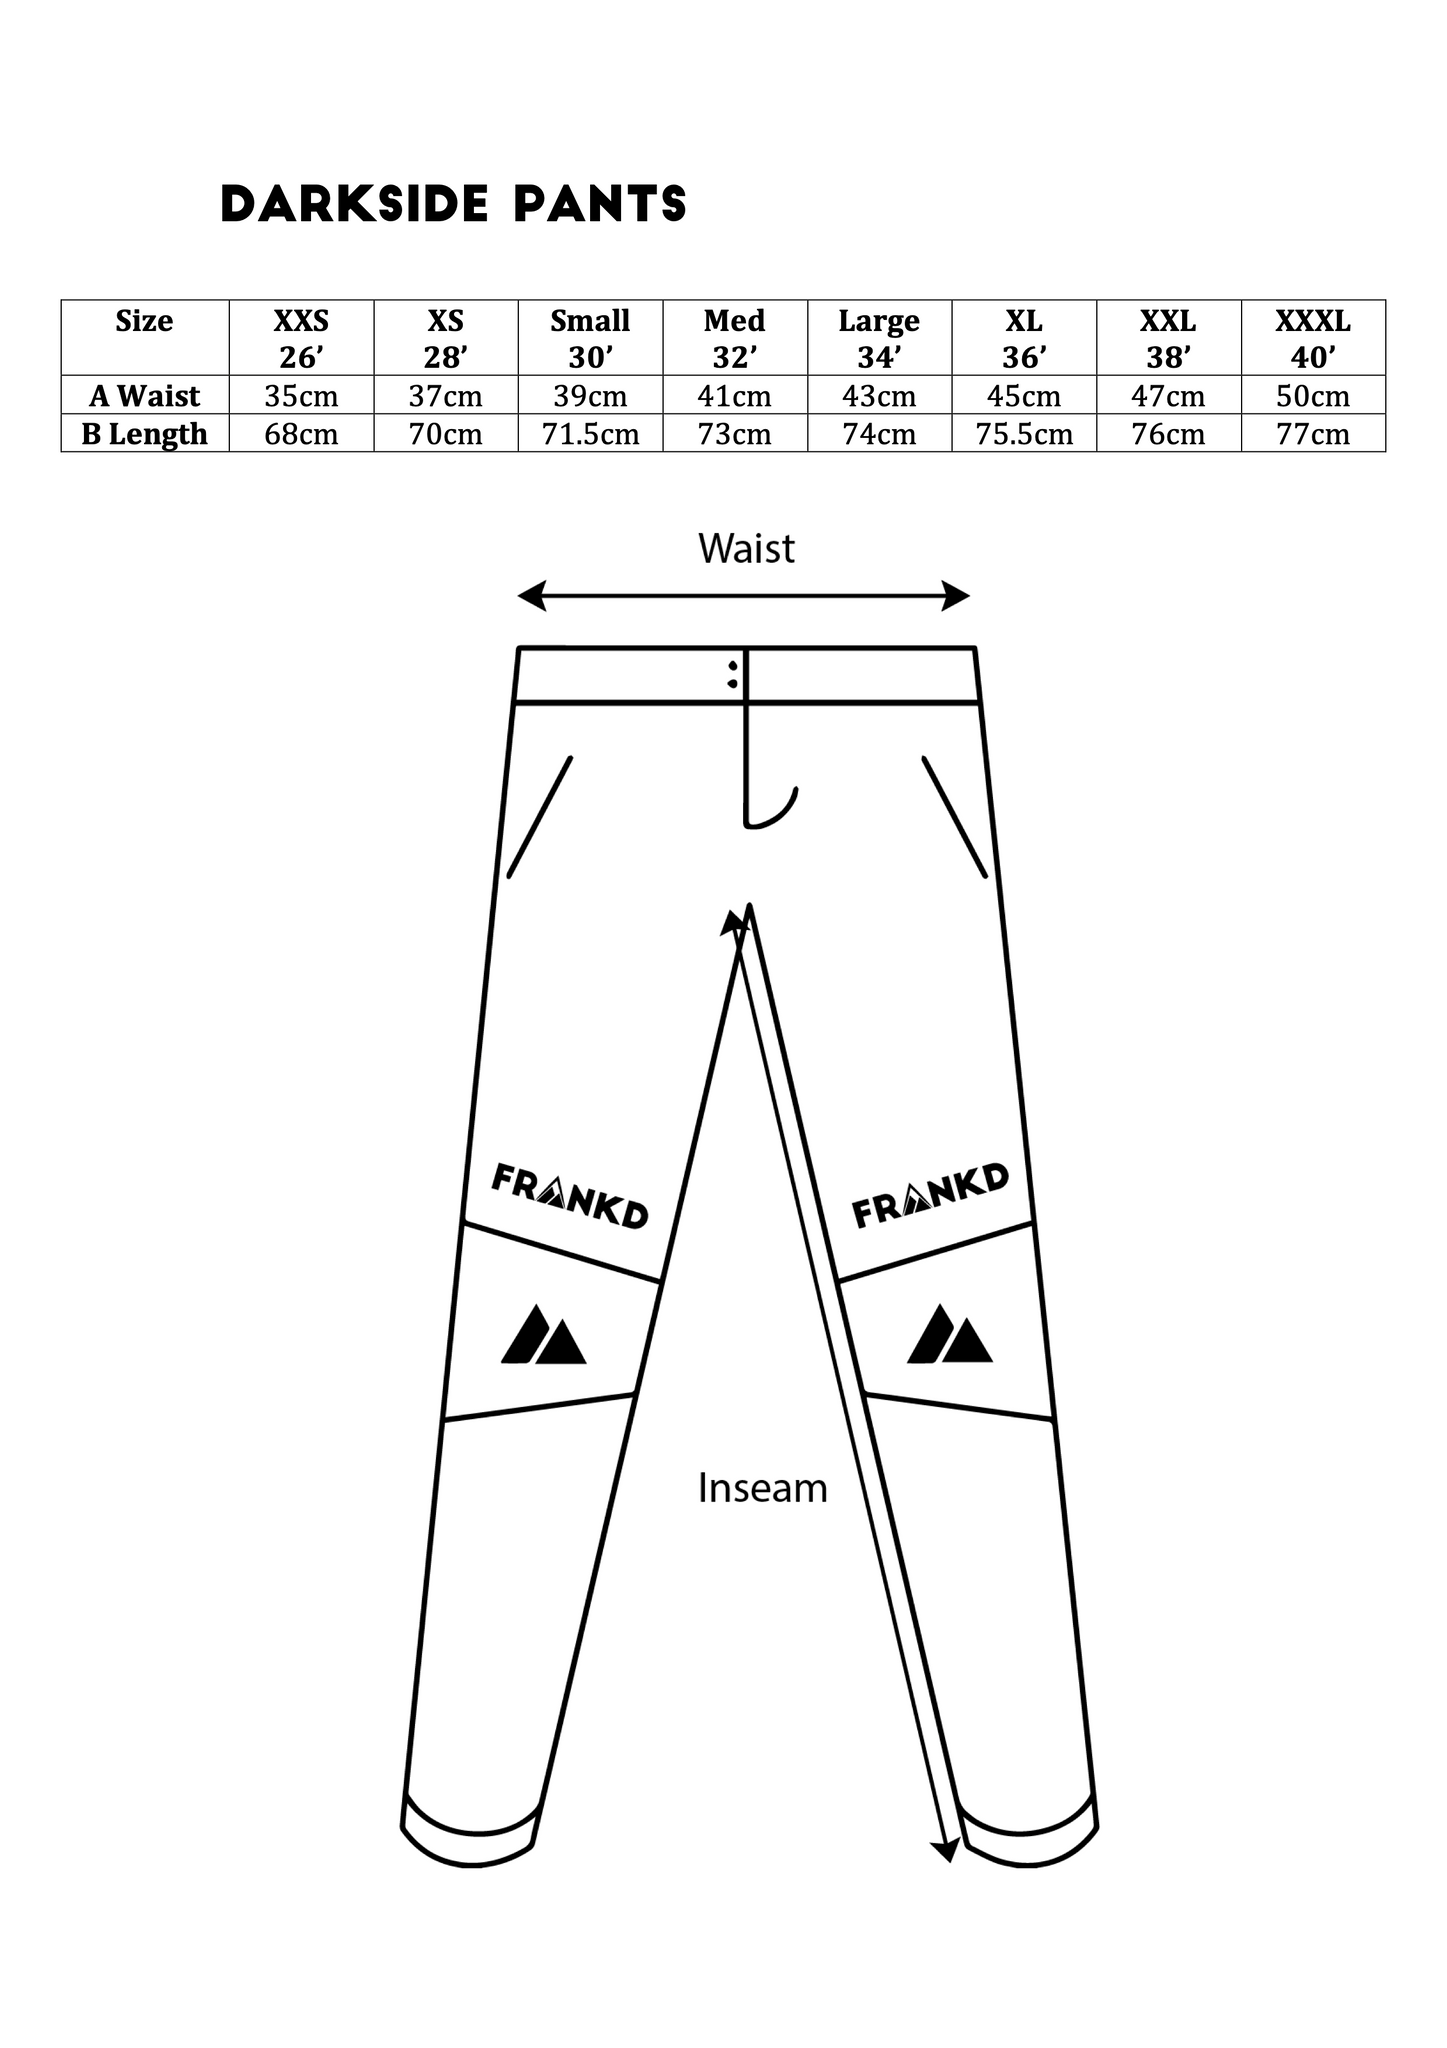 Darkside pants size chart